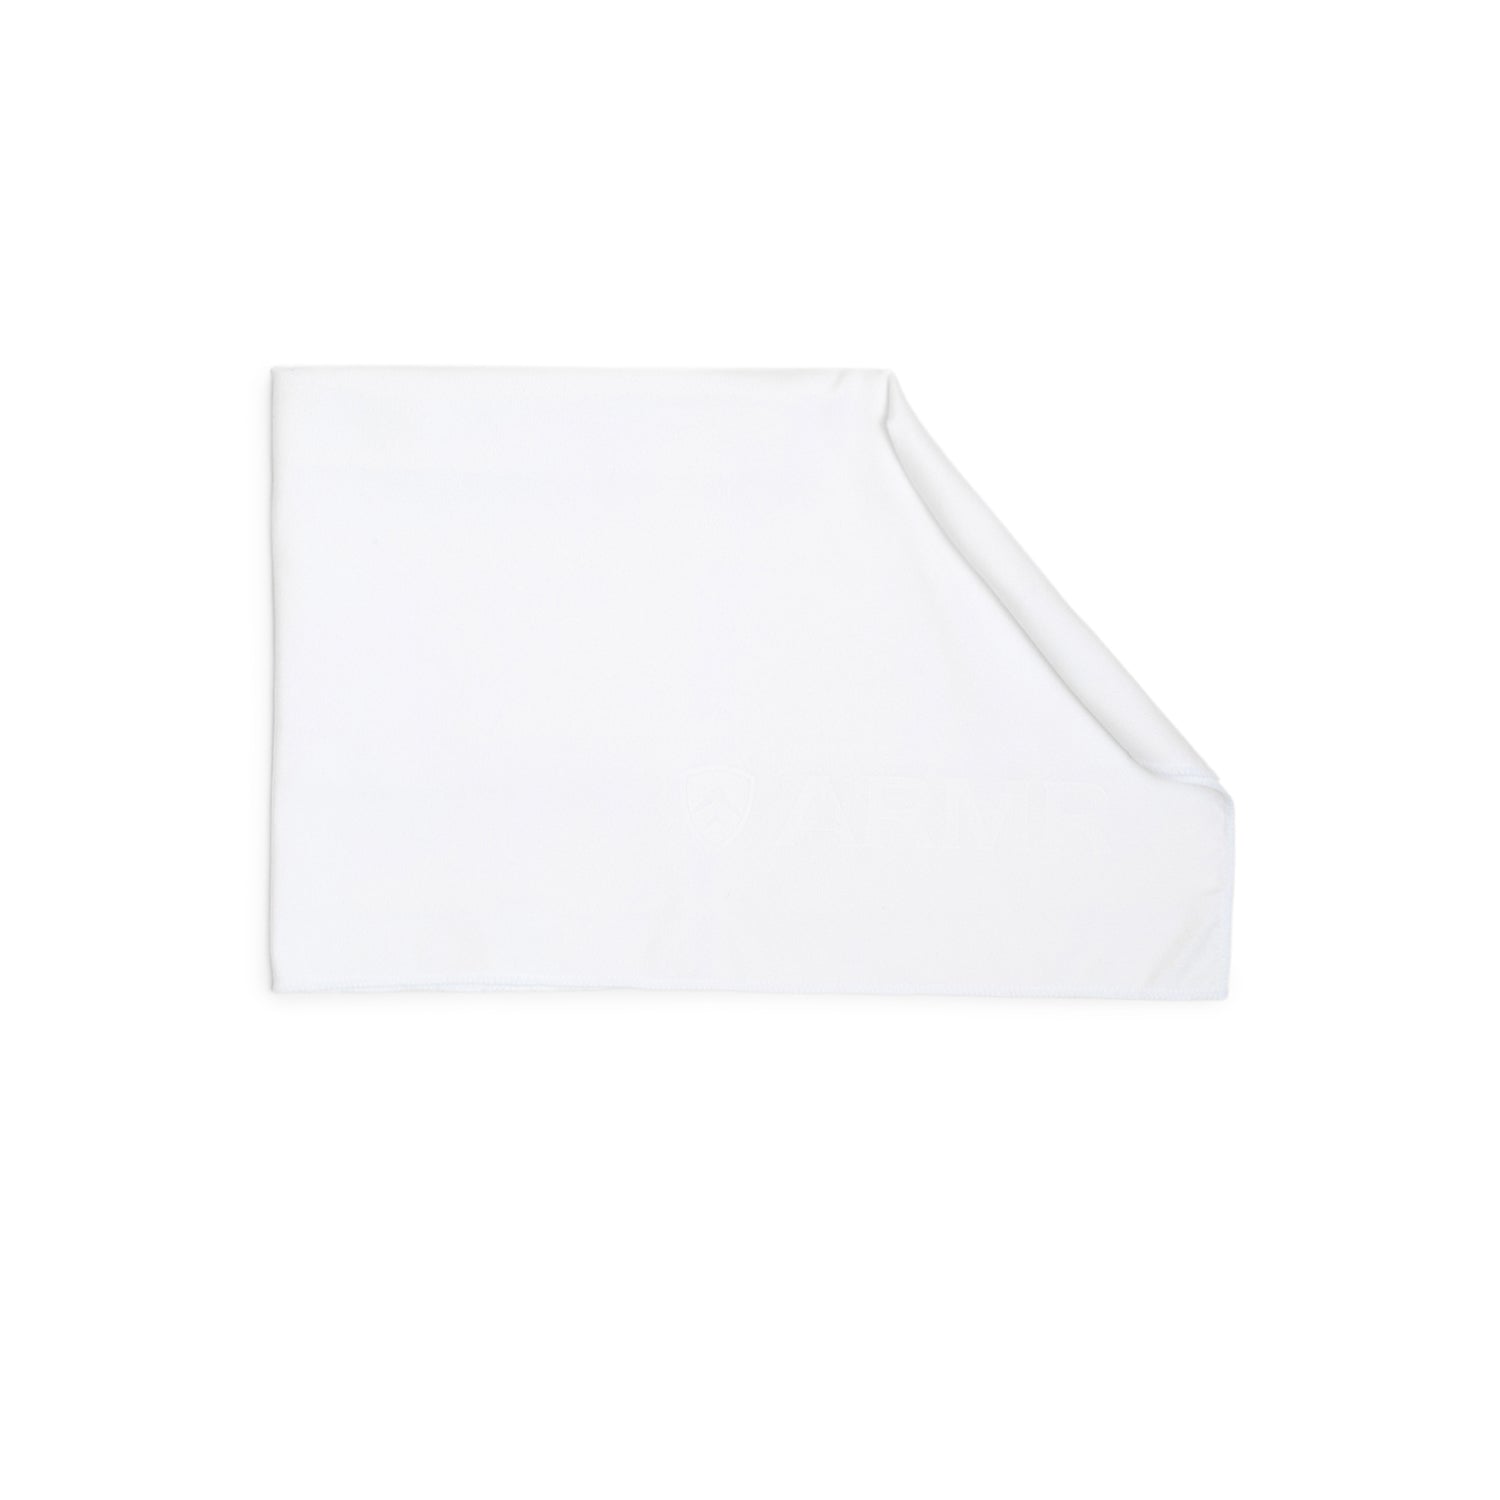 ARMR Unisex WHITE SPORT Quickdry TOWEL 